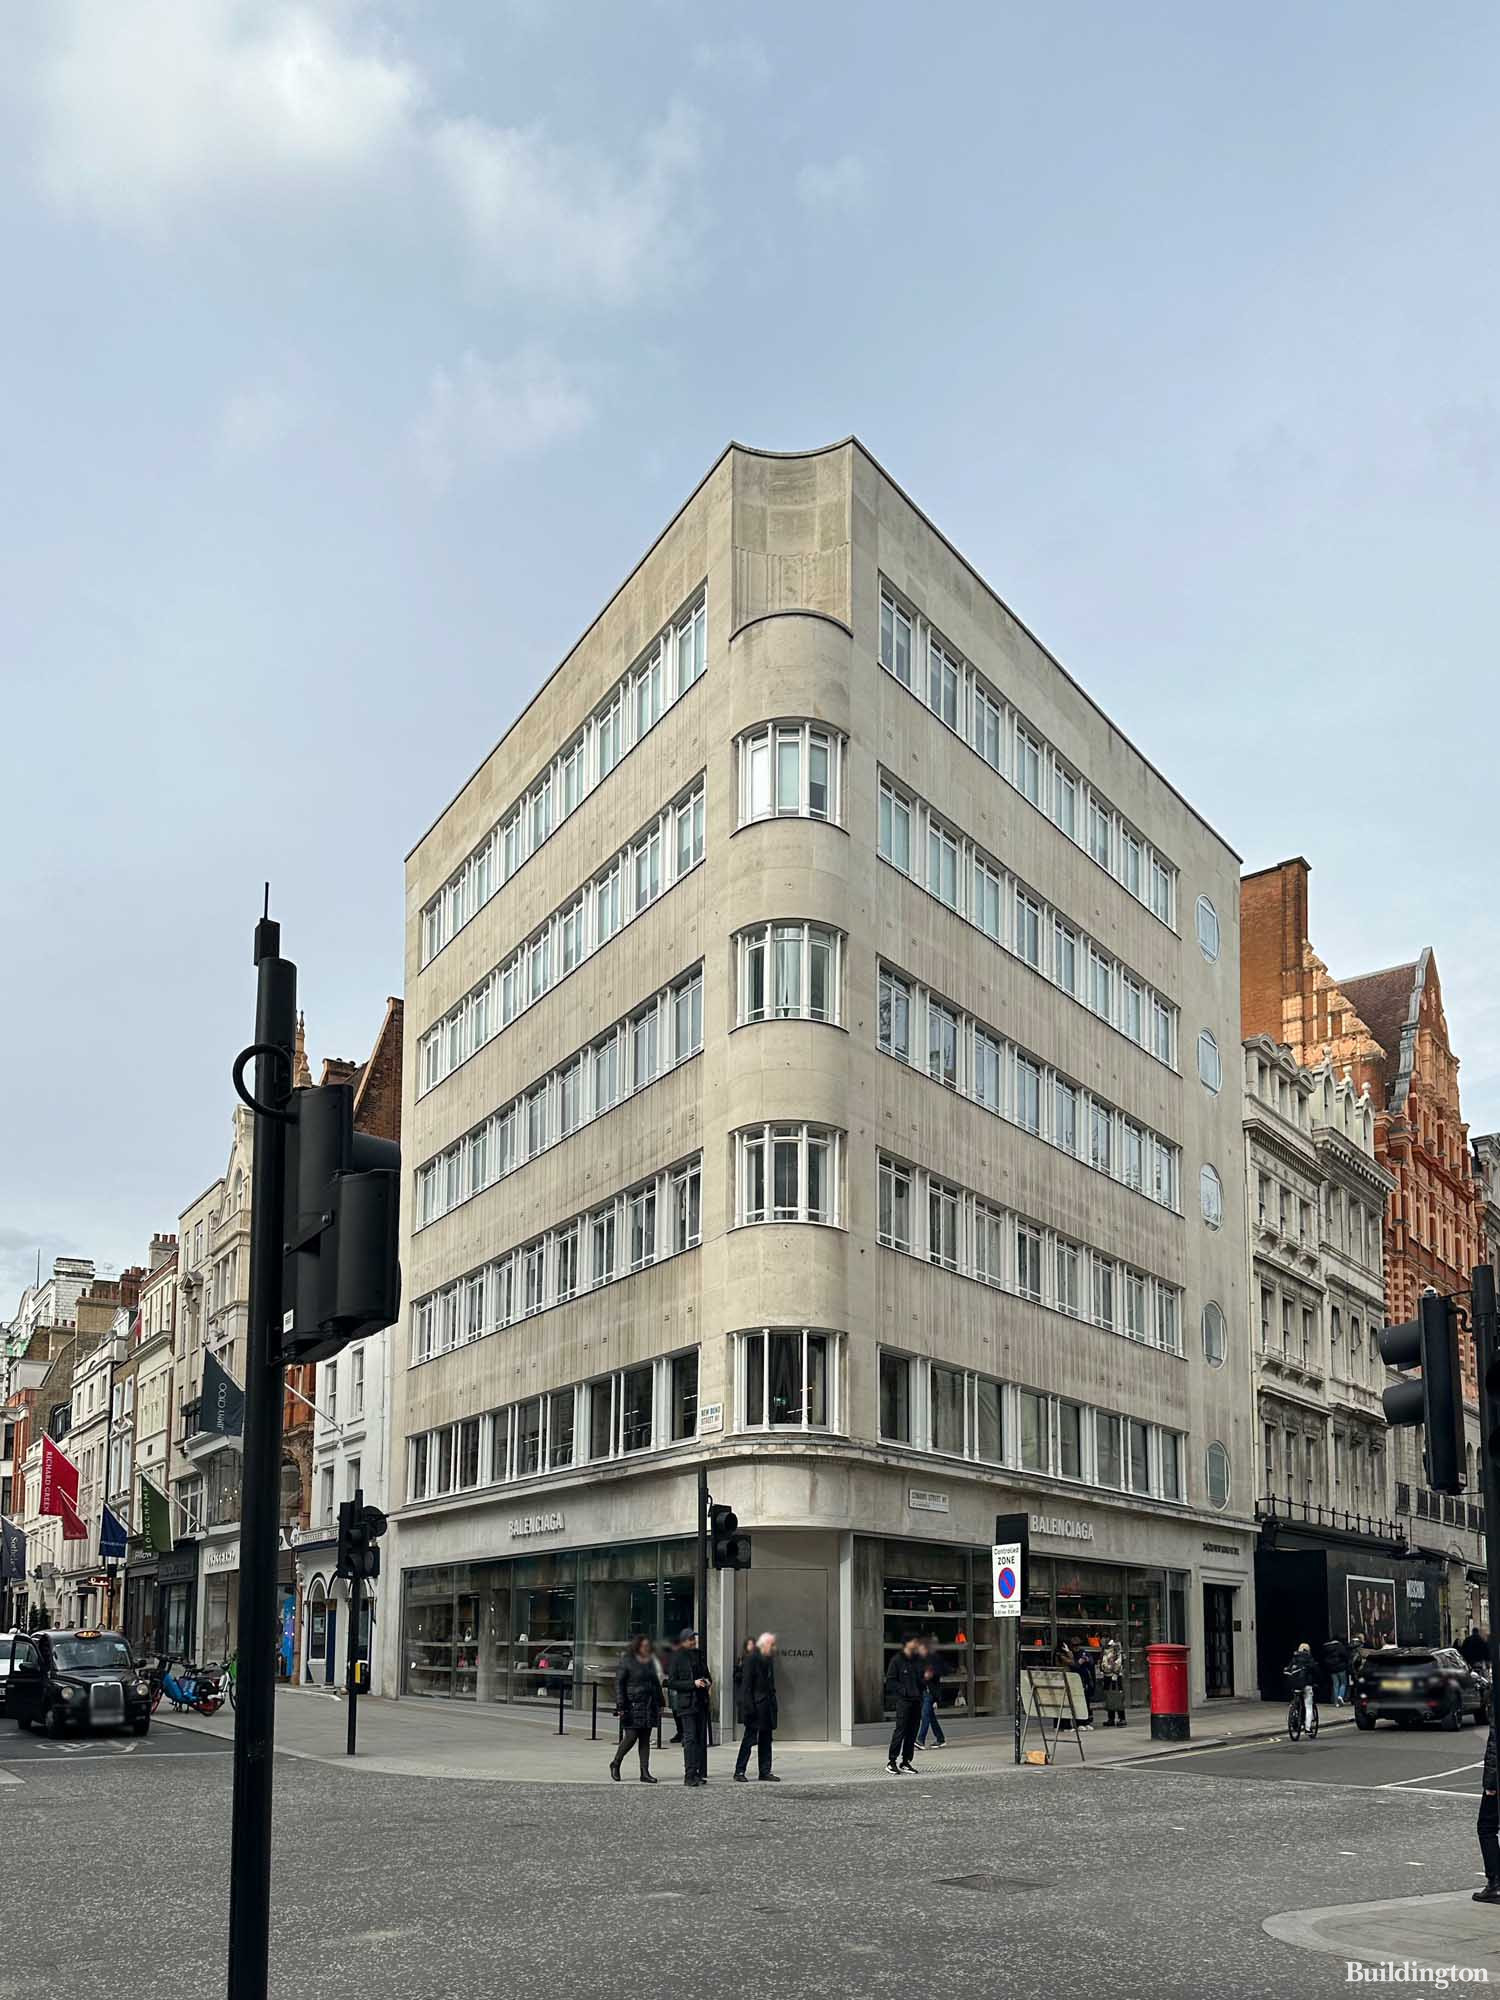 24-25 New Bond Street on the corner of Conduit Street in Mayfair, London W1.